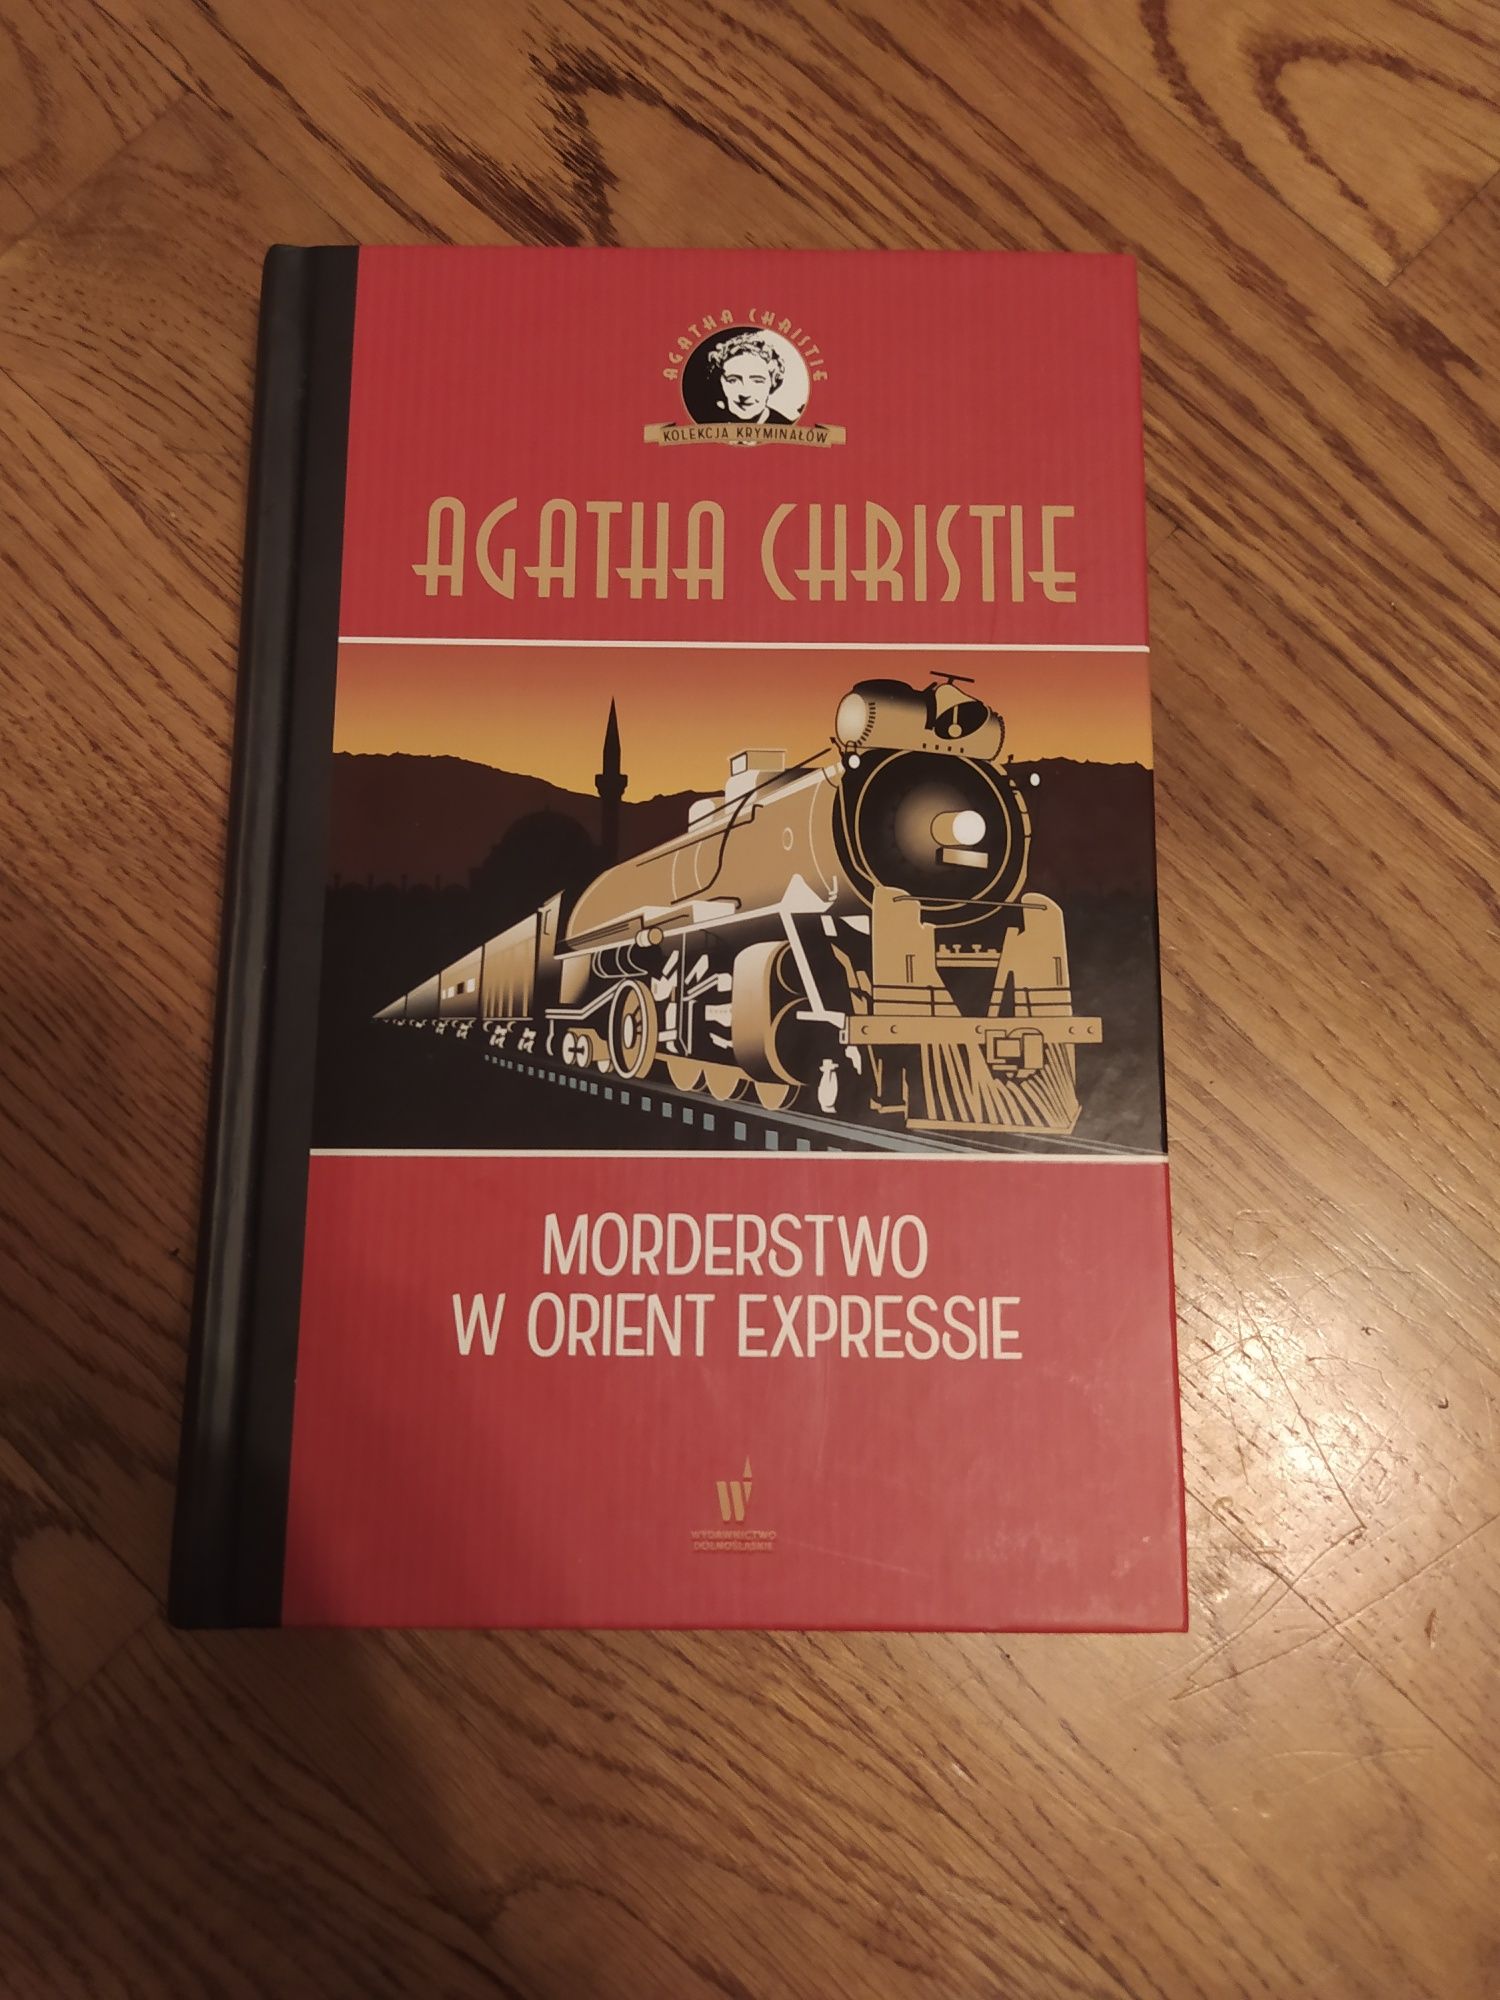 Książka Agatha Christie "Morderstwo w Orient Expressie"